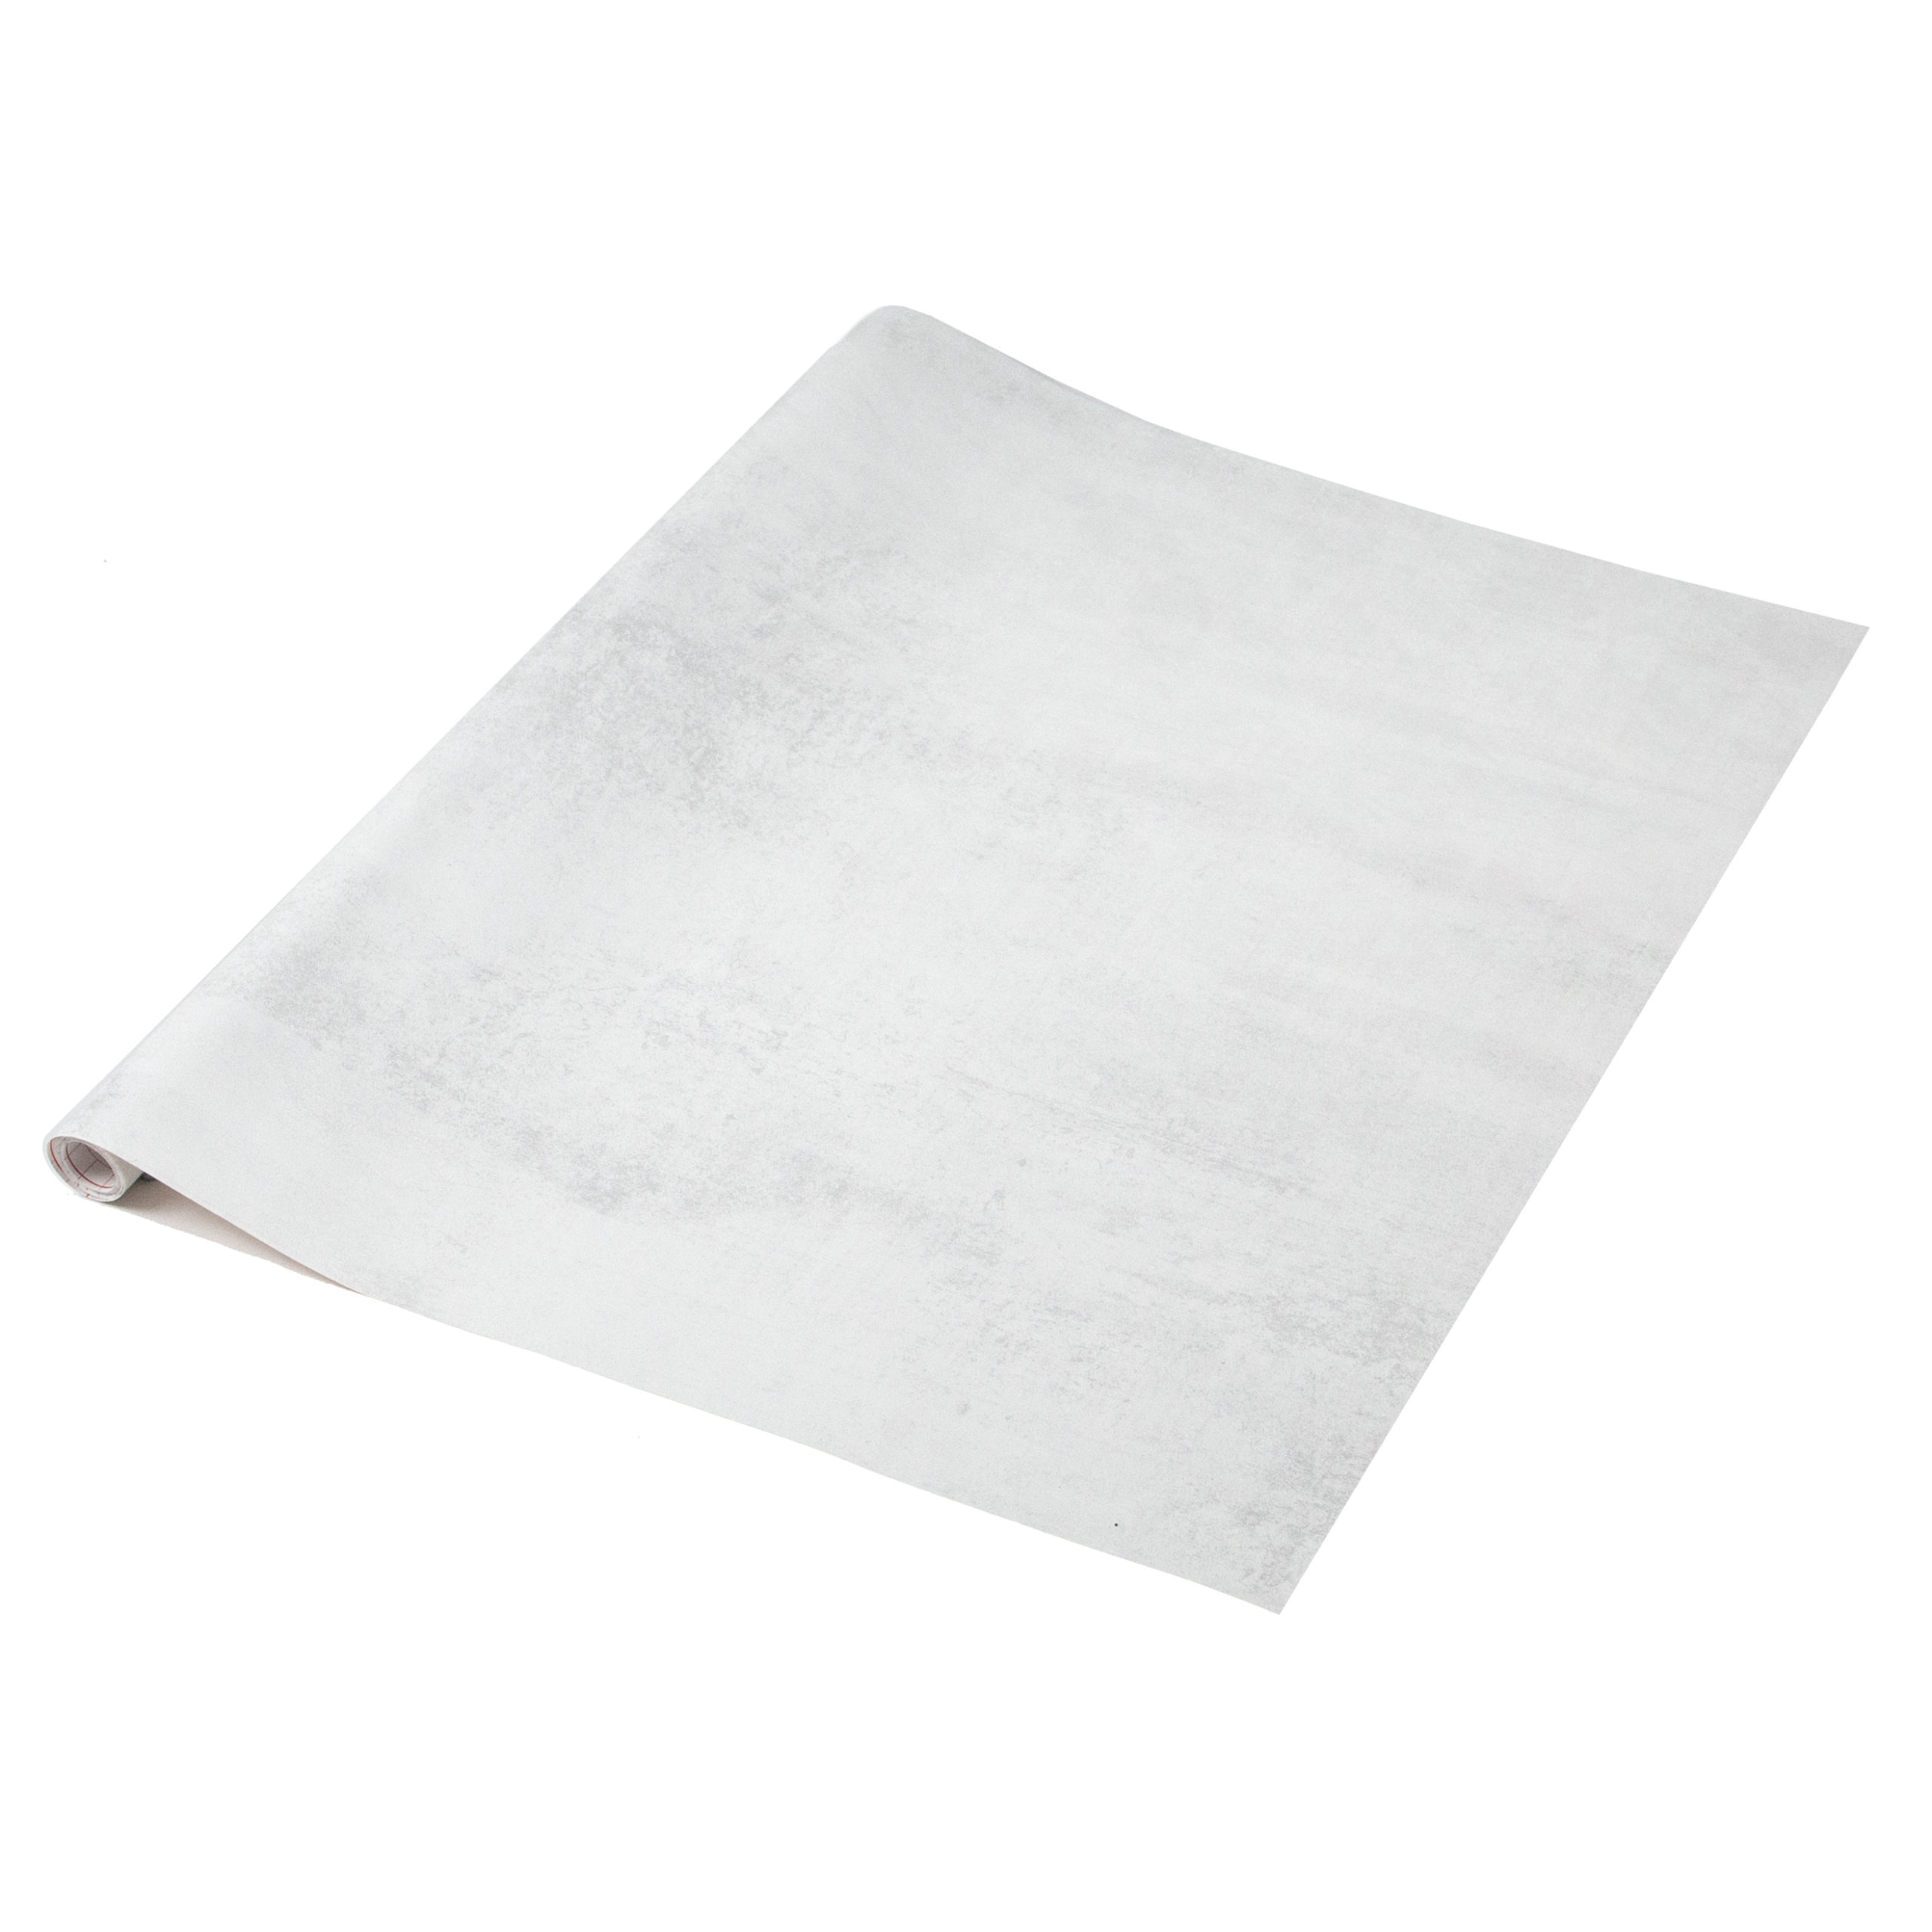 Dc fix Concrete White Self-Adhesive Vinyl Kitchen Wrap